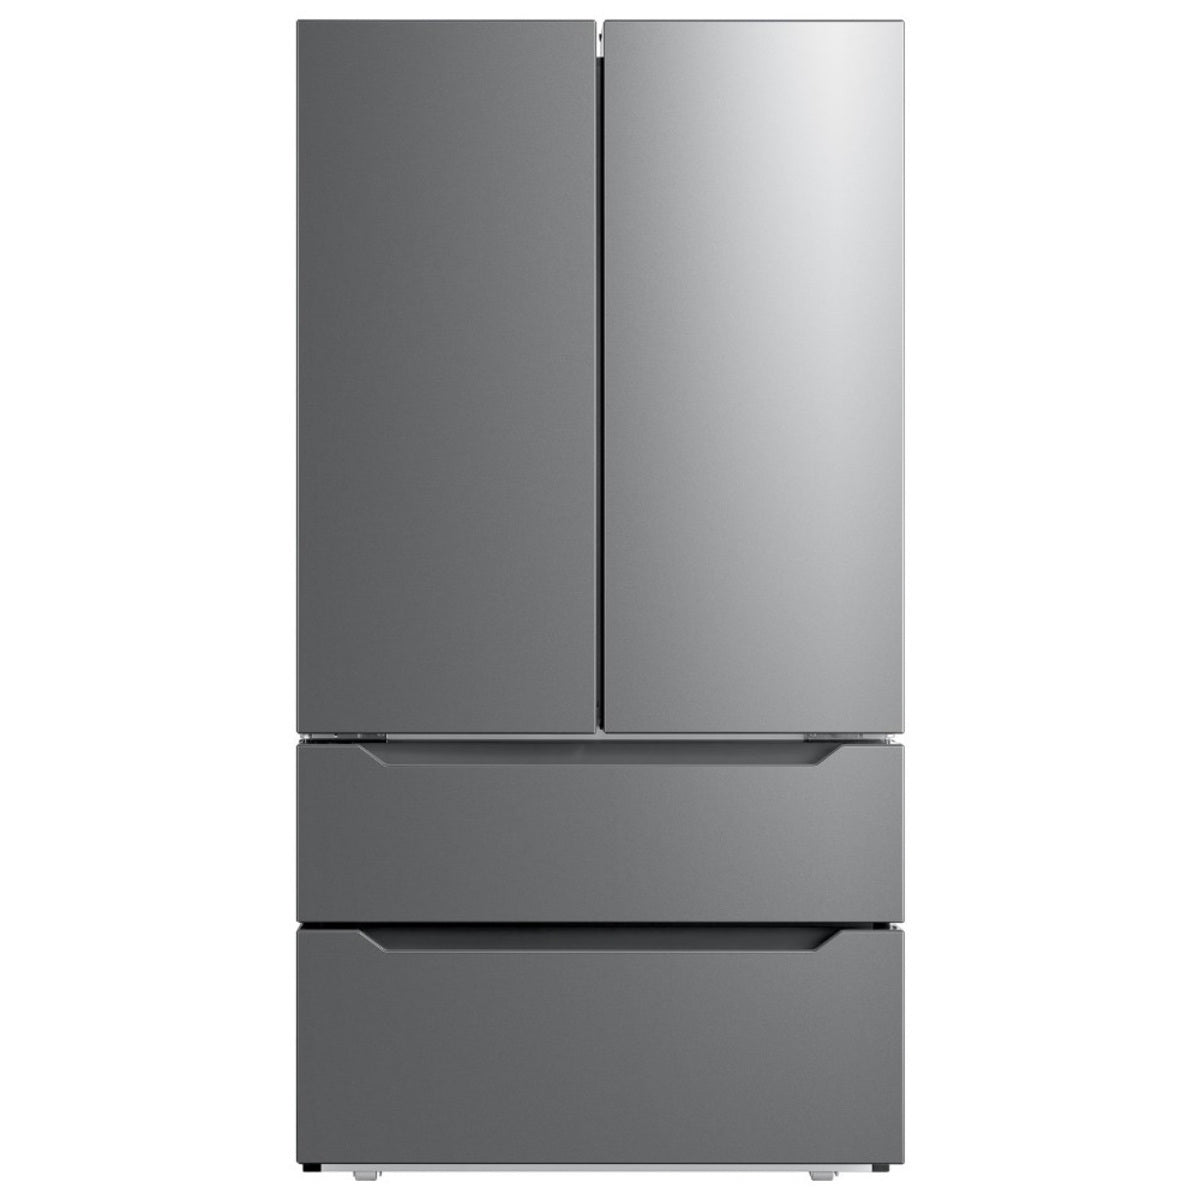 Moffat - 35.83 Inch 22 cu. ft French Door Refrigerator in Stainless - MWE22FYPKFS